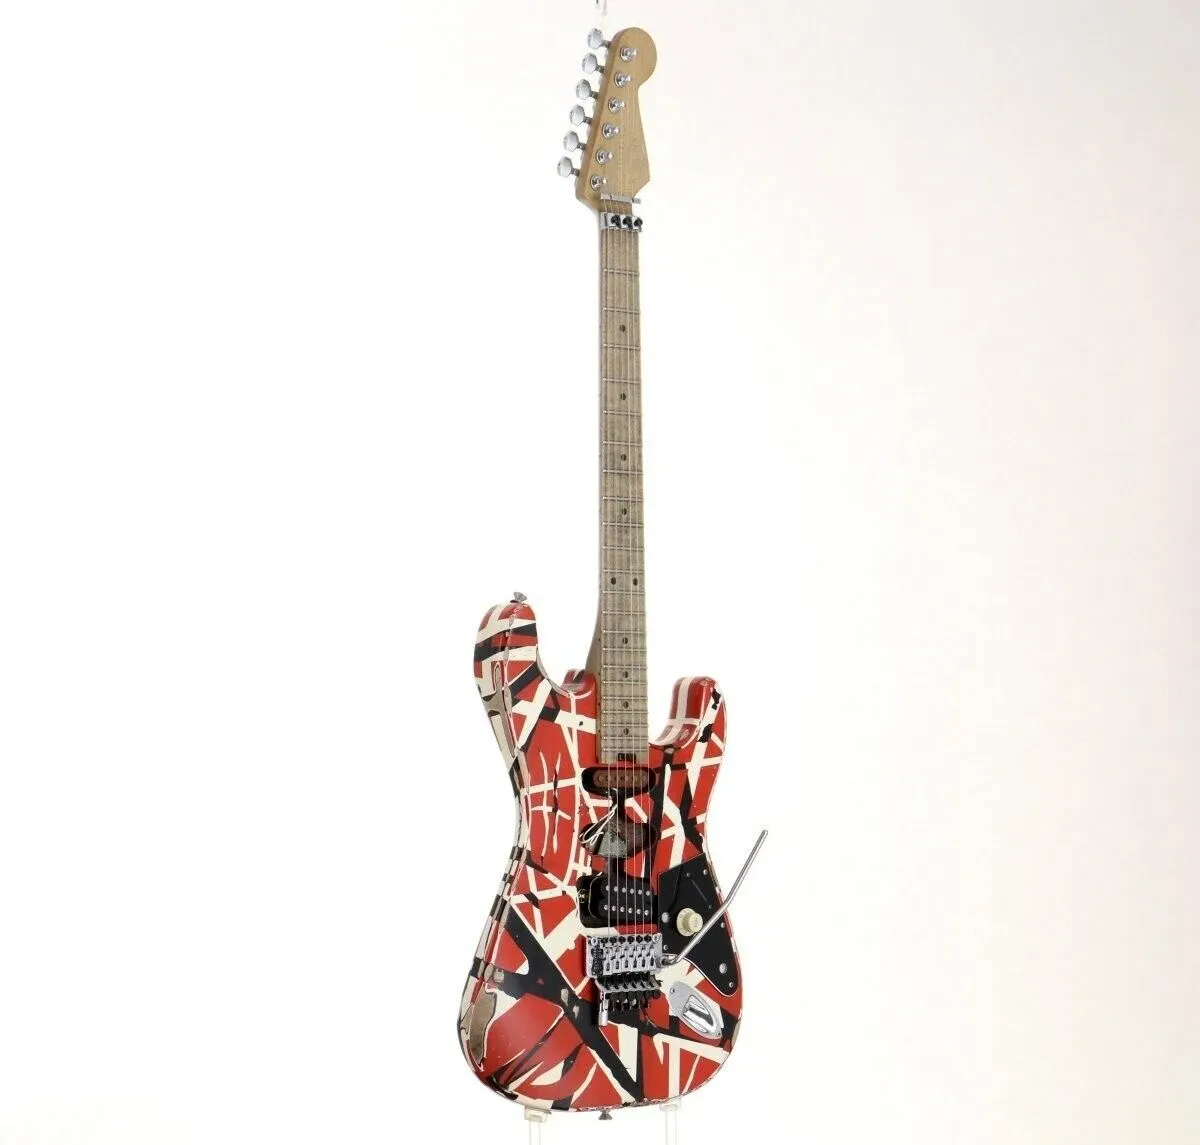 Ev h Series Series Frankie Red Black White Relic Guitar # 5236